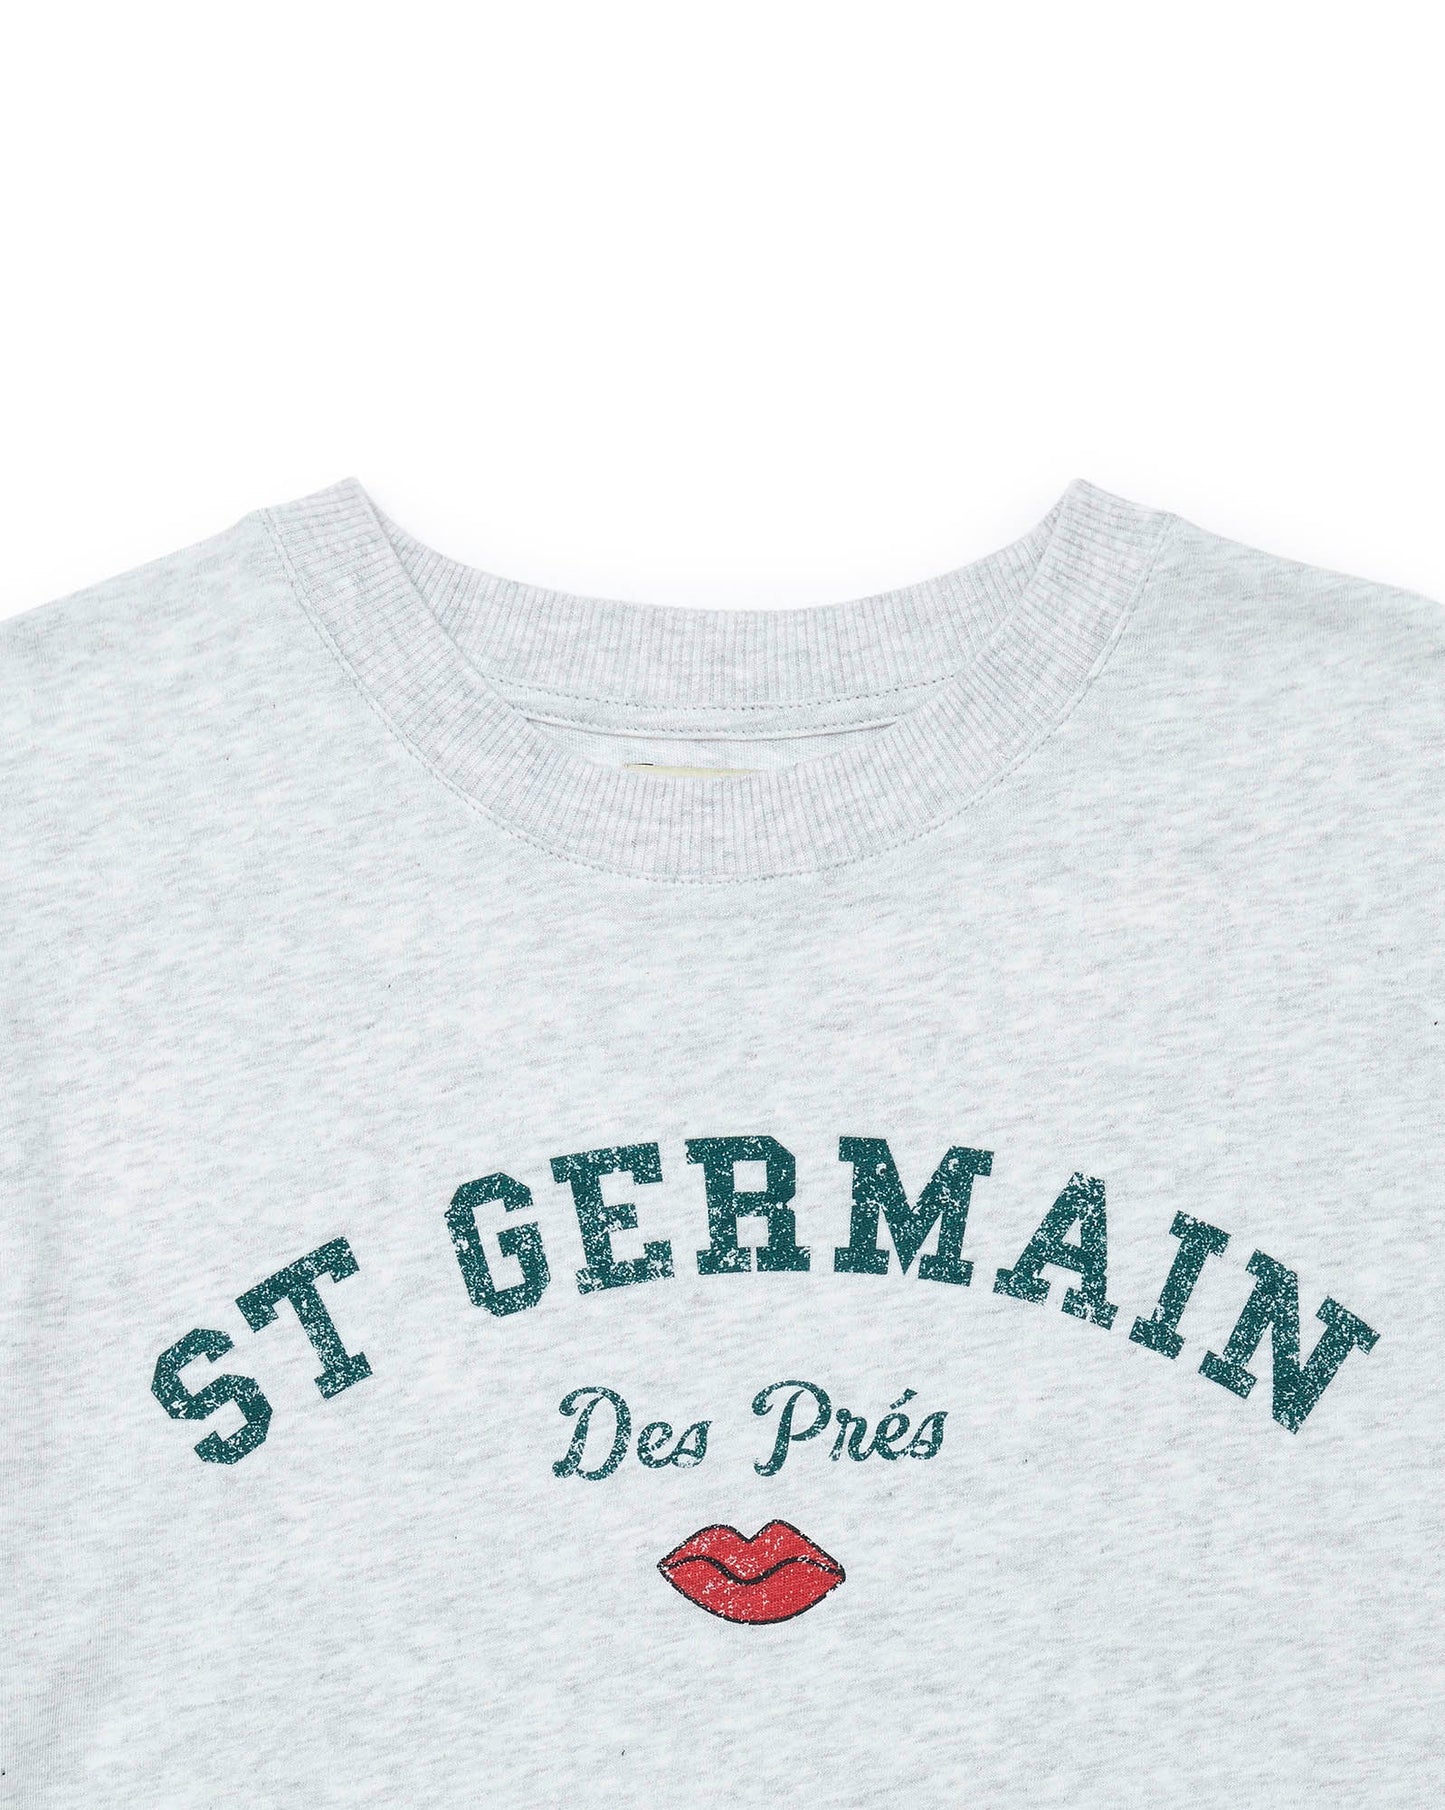 T -shirt - Saint Germain des Prés Bonton X Sonia Rykiel